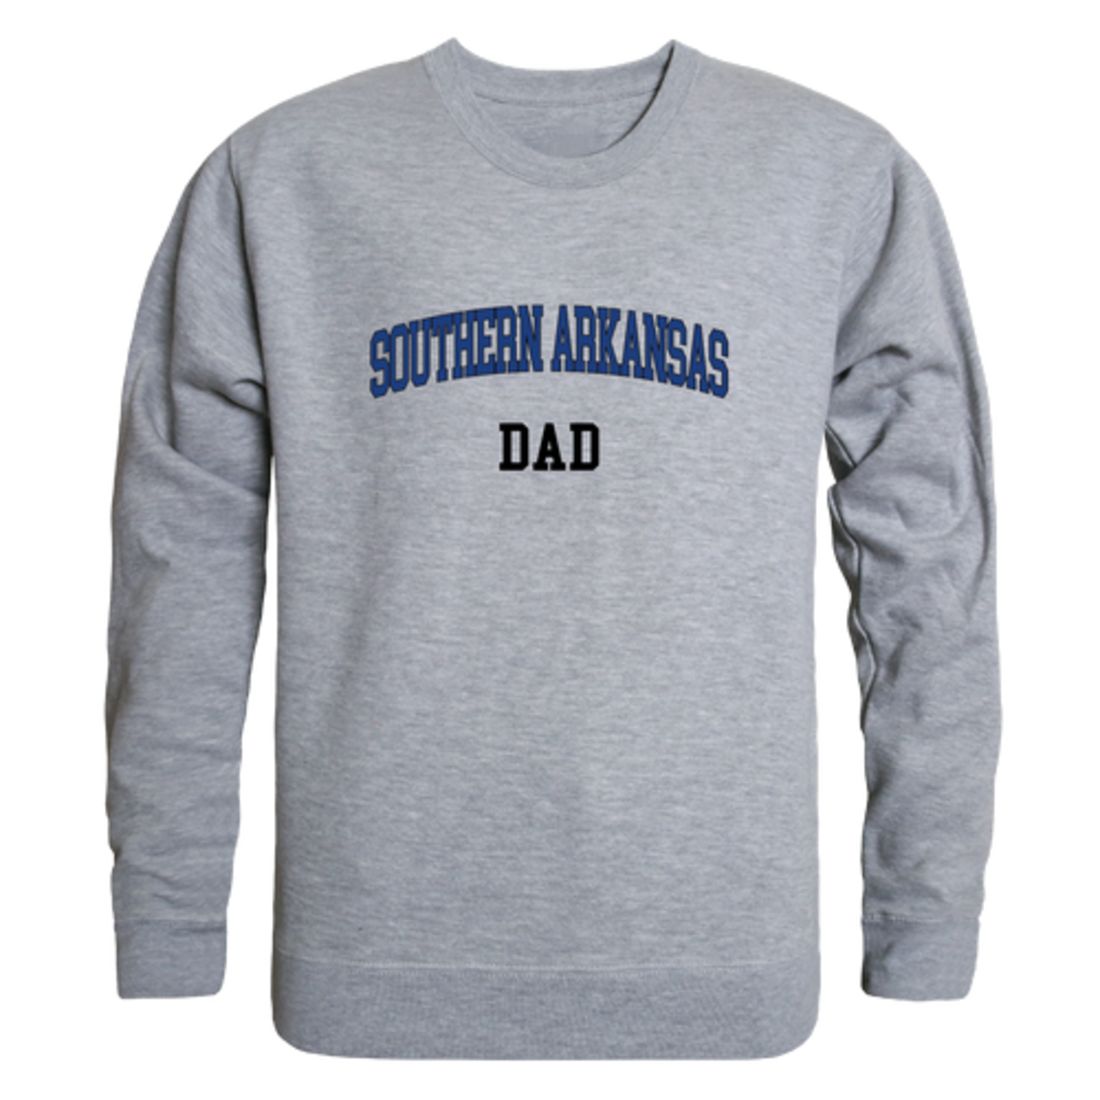 Southern Arkansas University Muleriders Dad Fleece Crewneck Pullover Sweatshirt